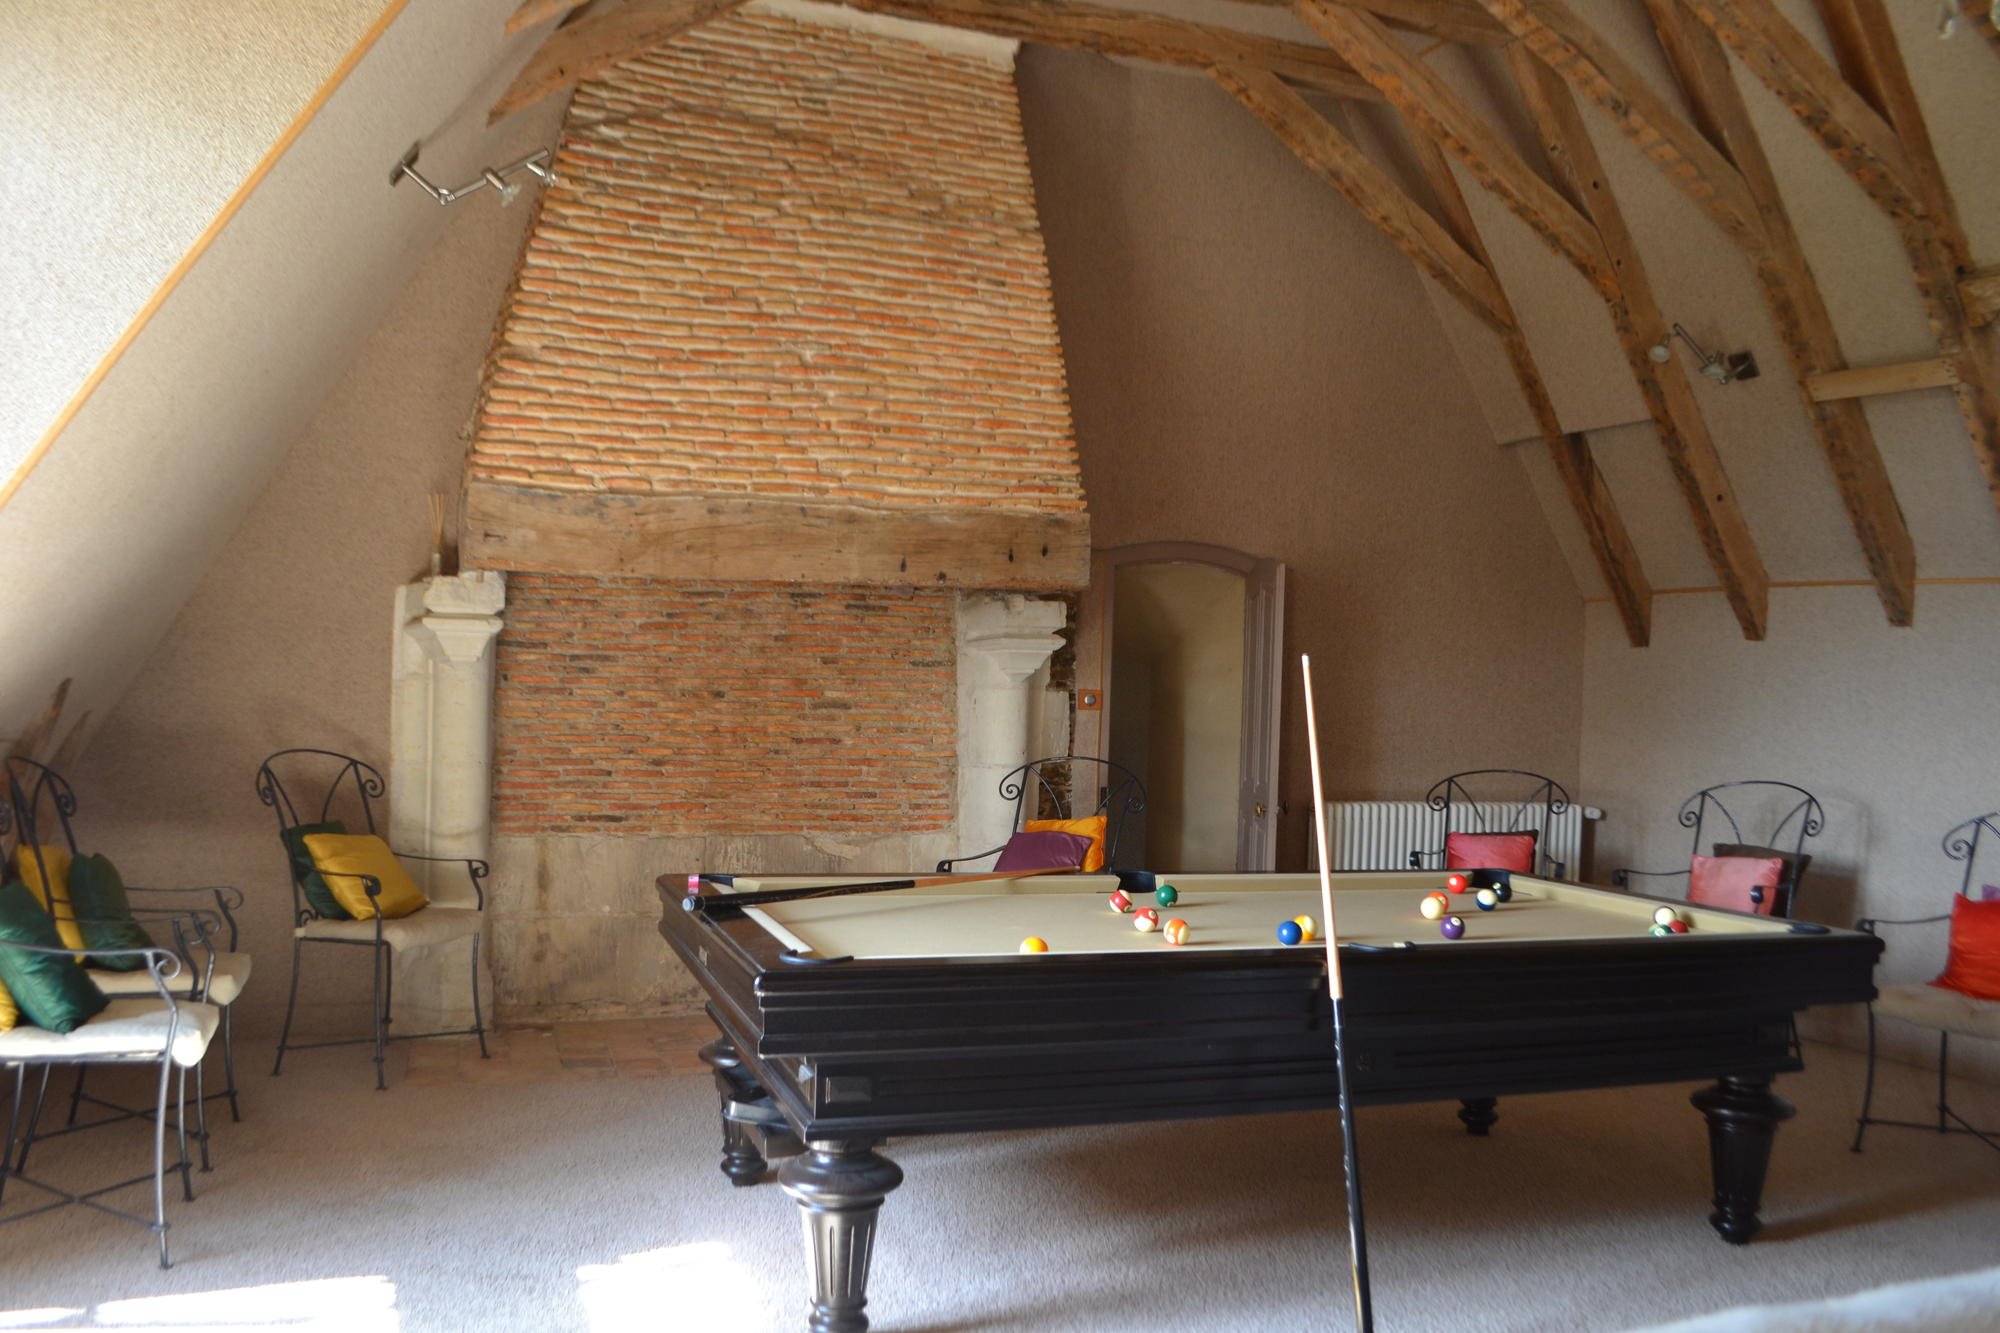 snooker pool home cinema chateau epinay